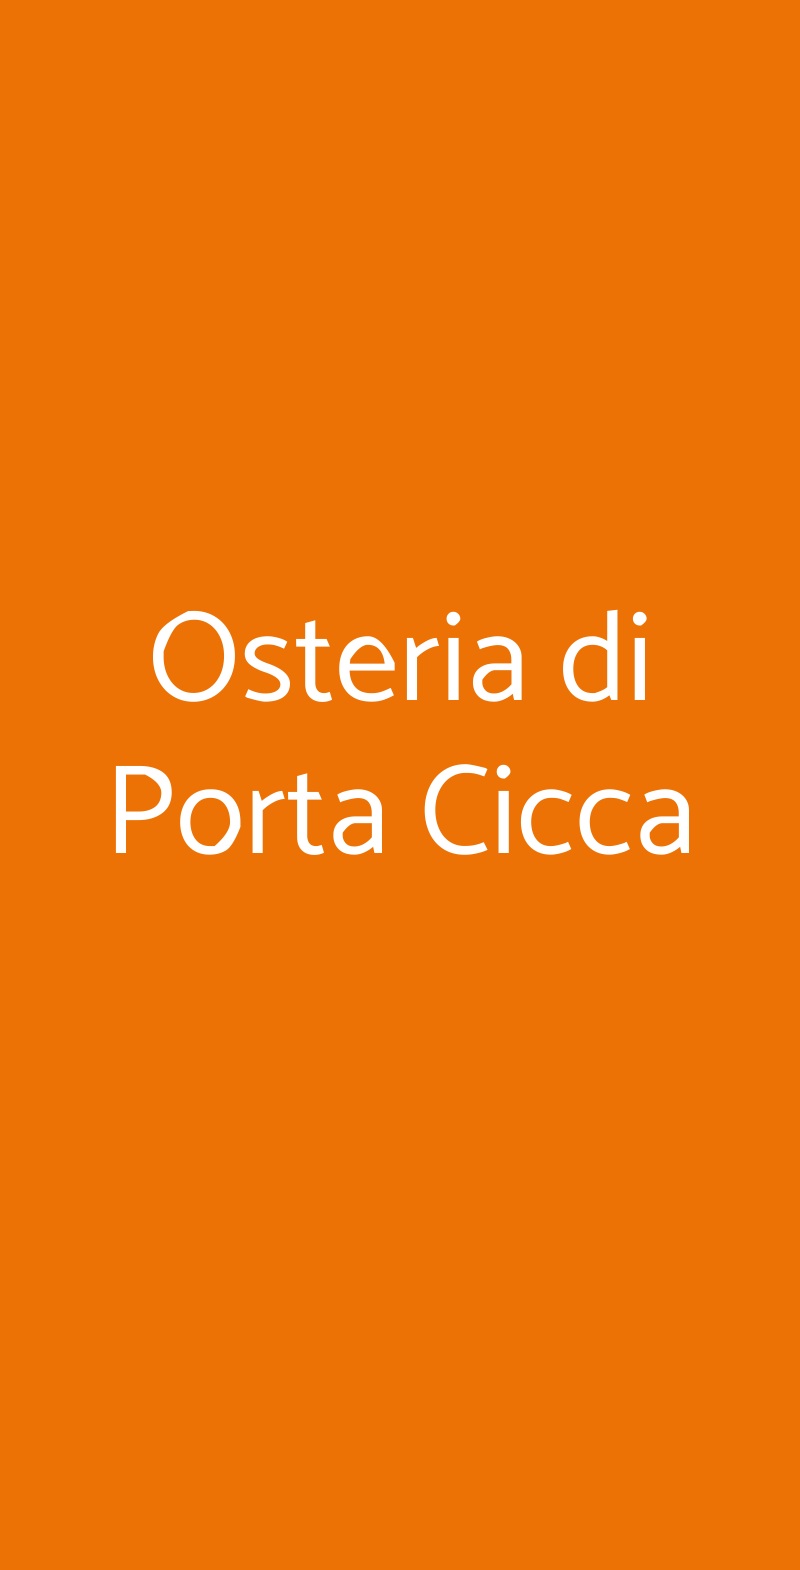 Osteria di Porta Cicca Milano menù 1 pagina